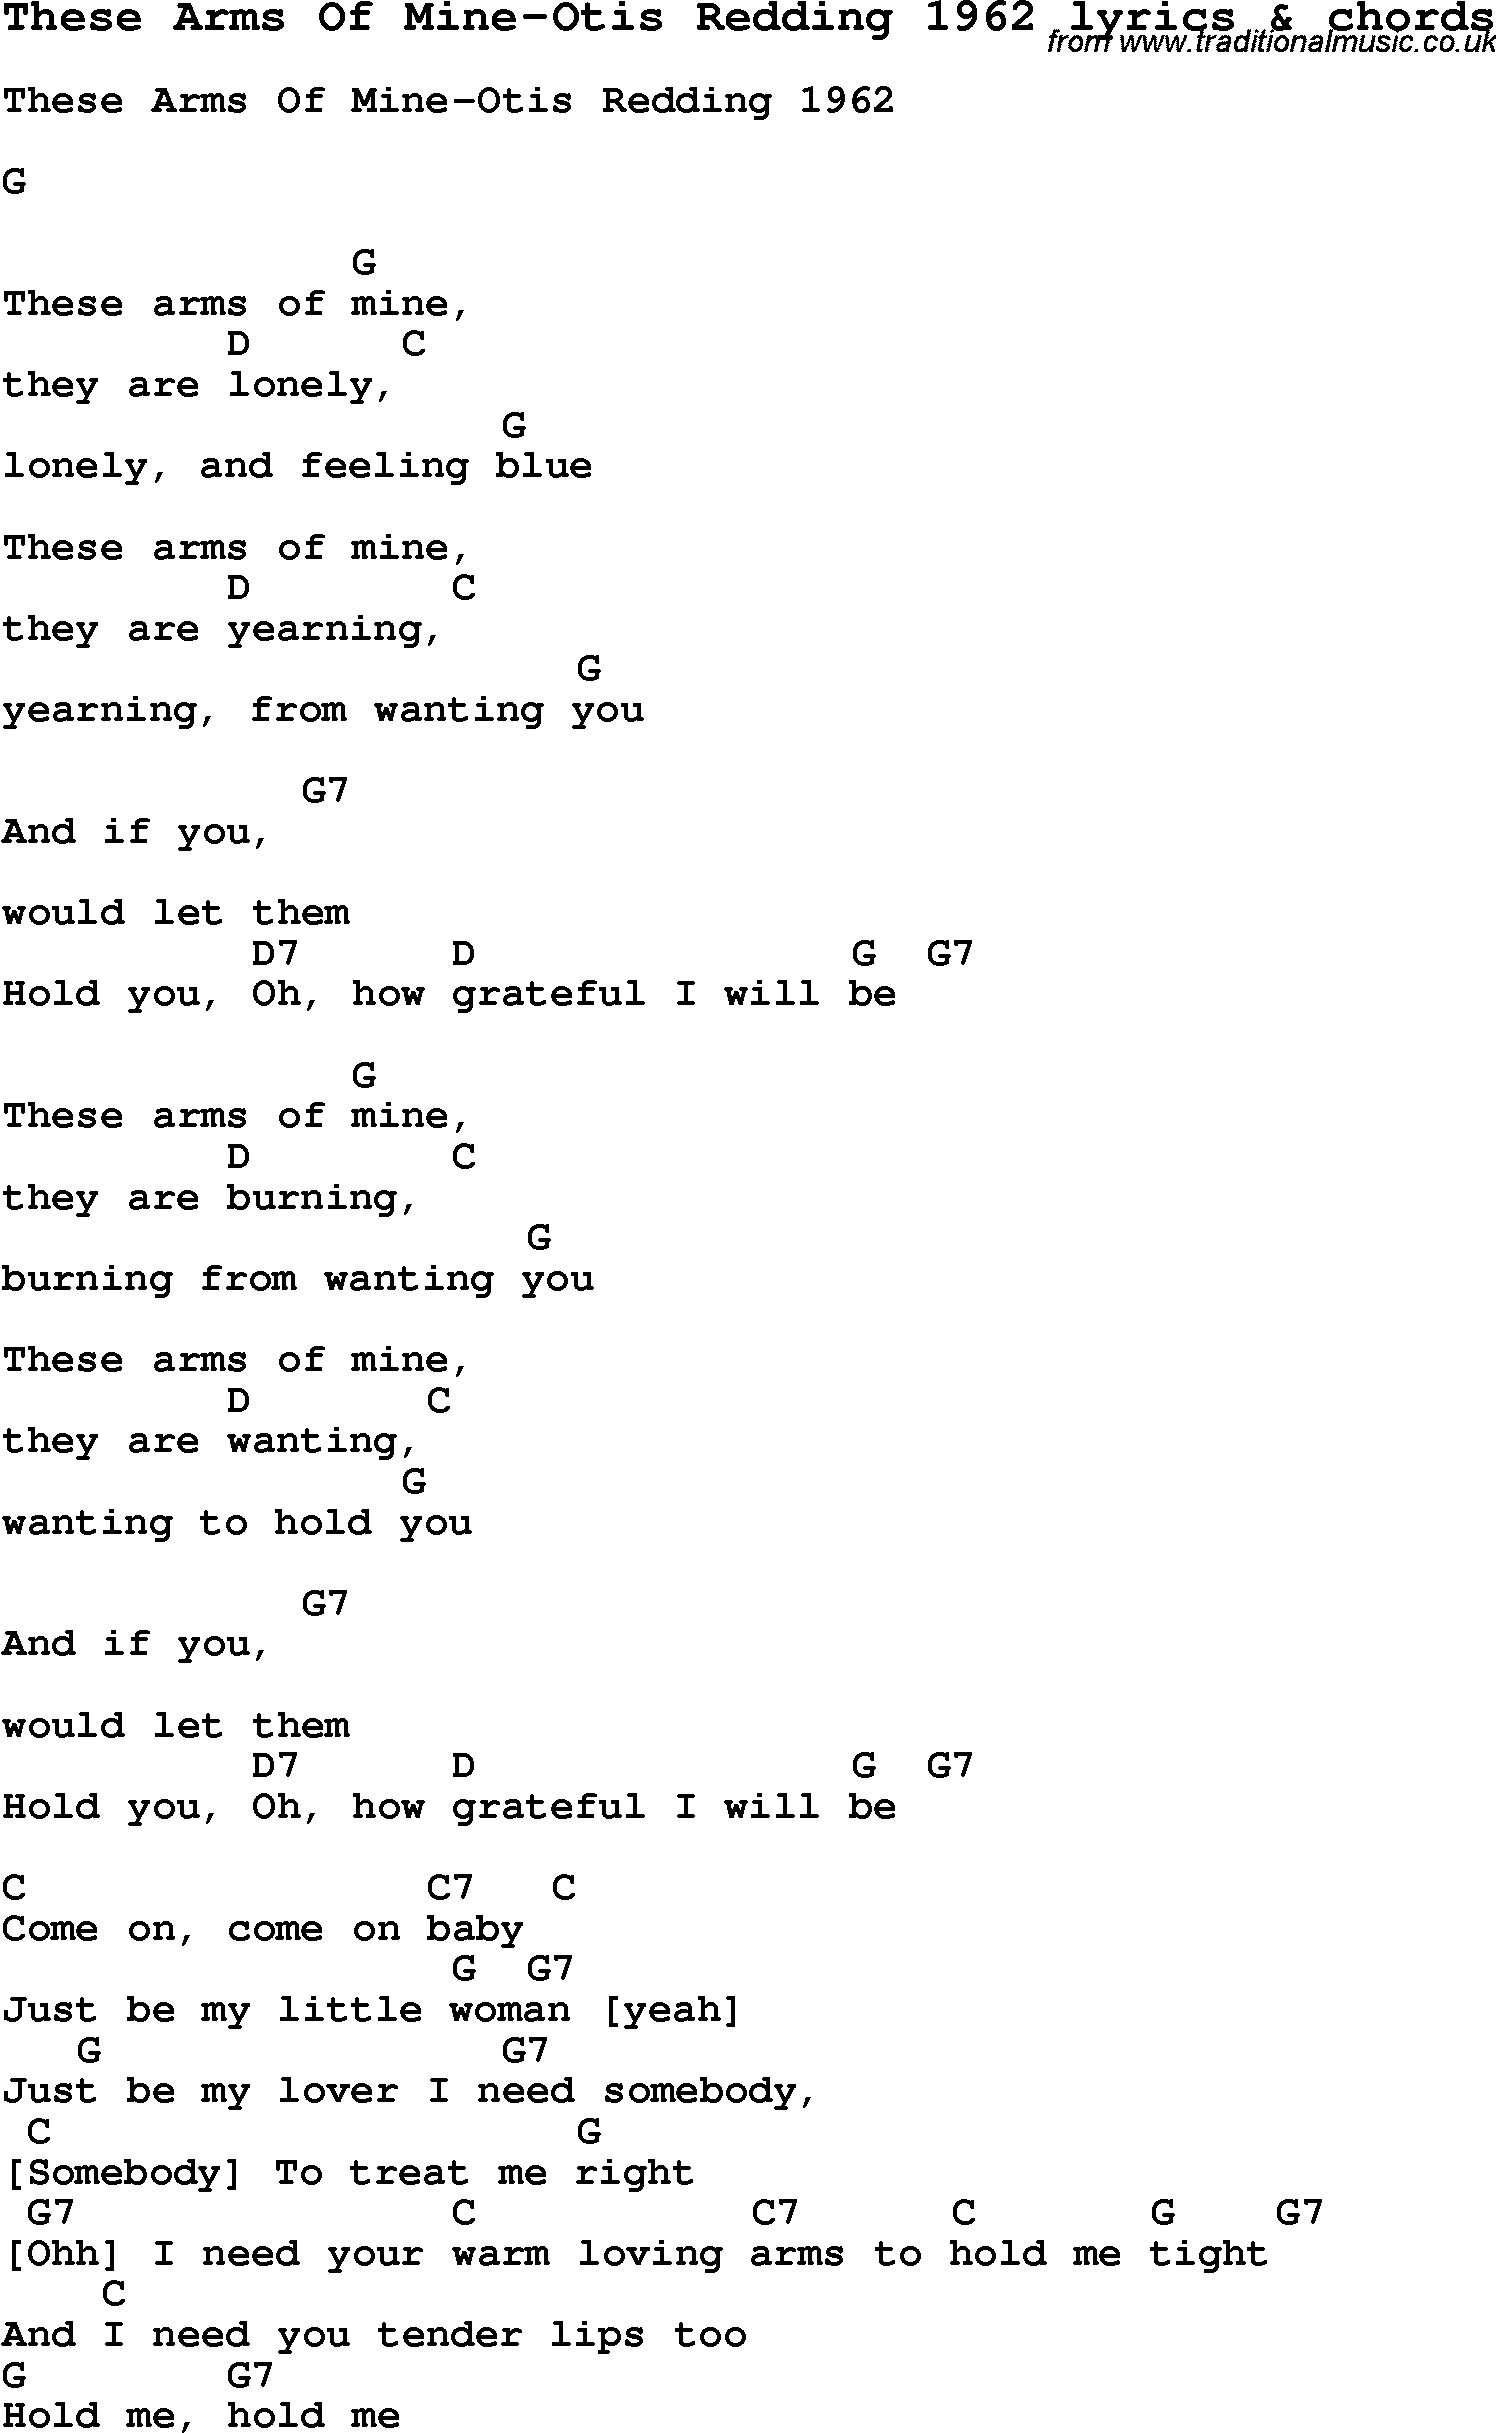 Love Song Lyrics for: These Arms Of Mine-Otis Redding 1962 with chords for Ukulele, Guitar Banjo etc.